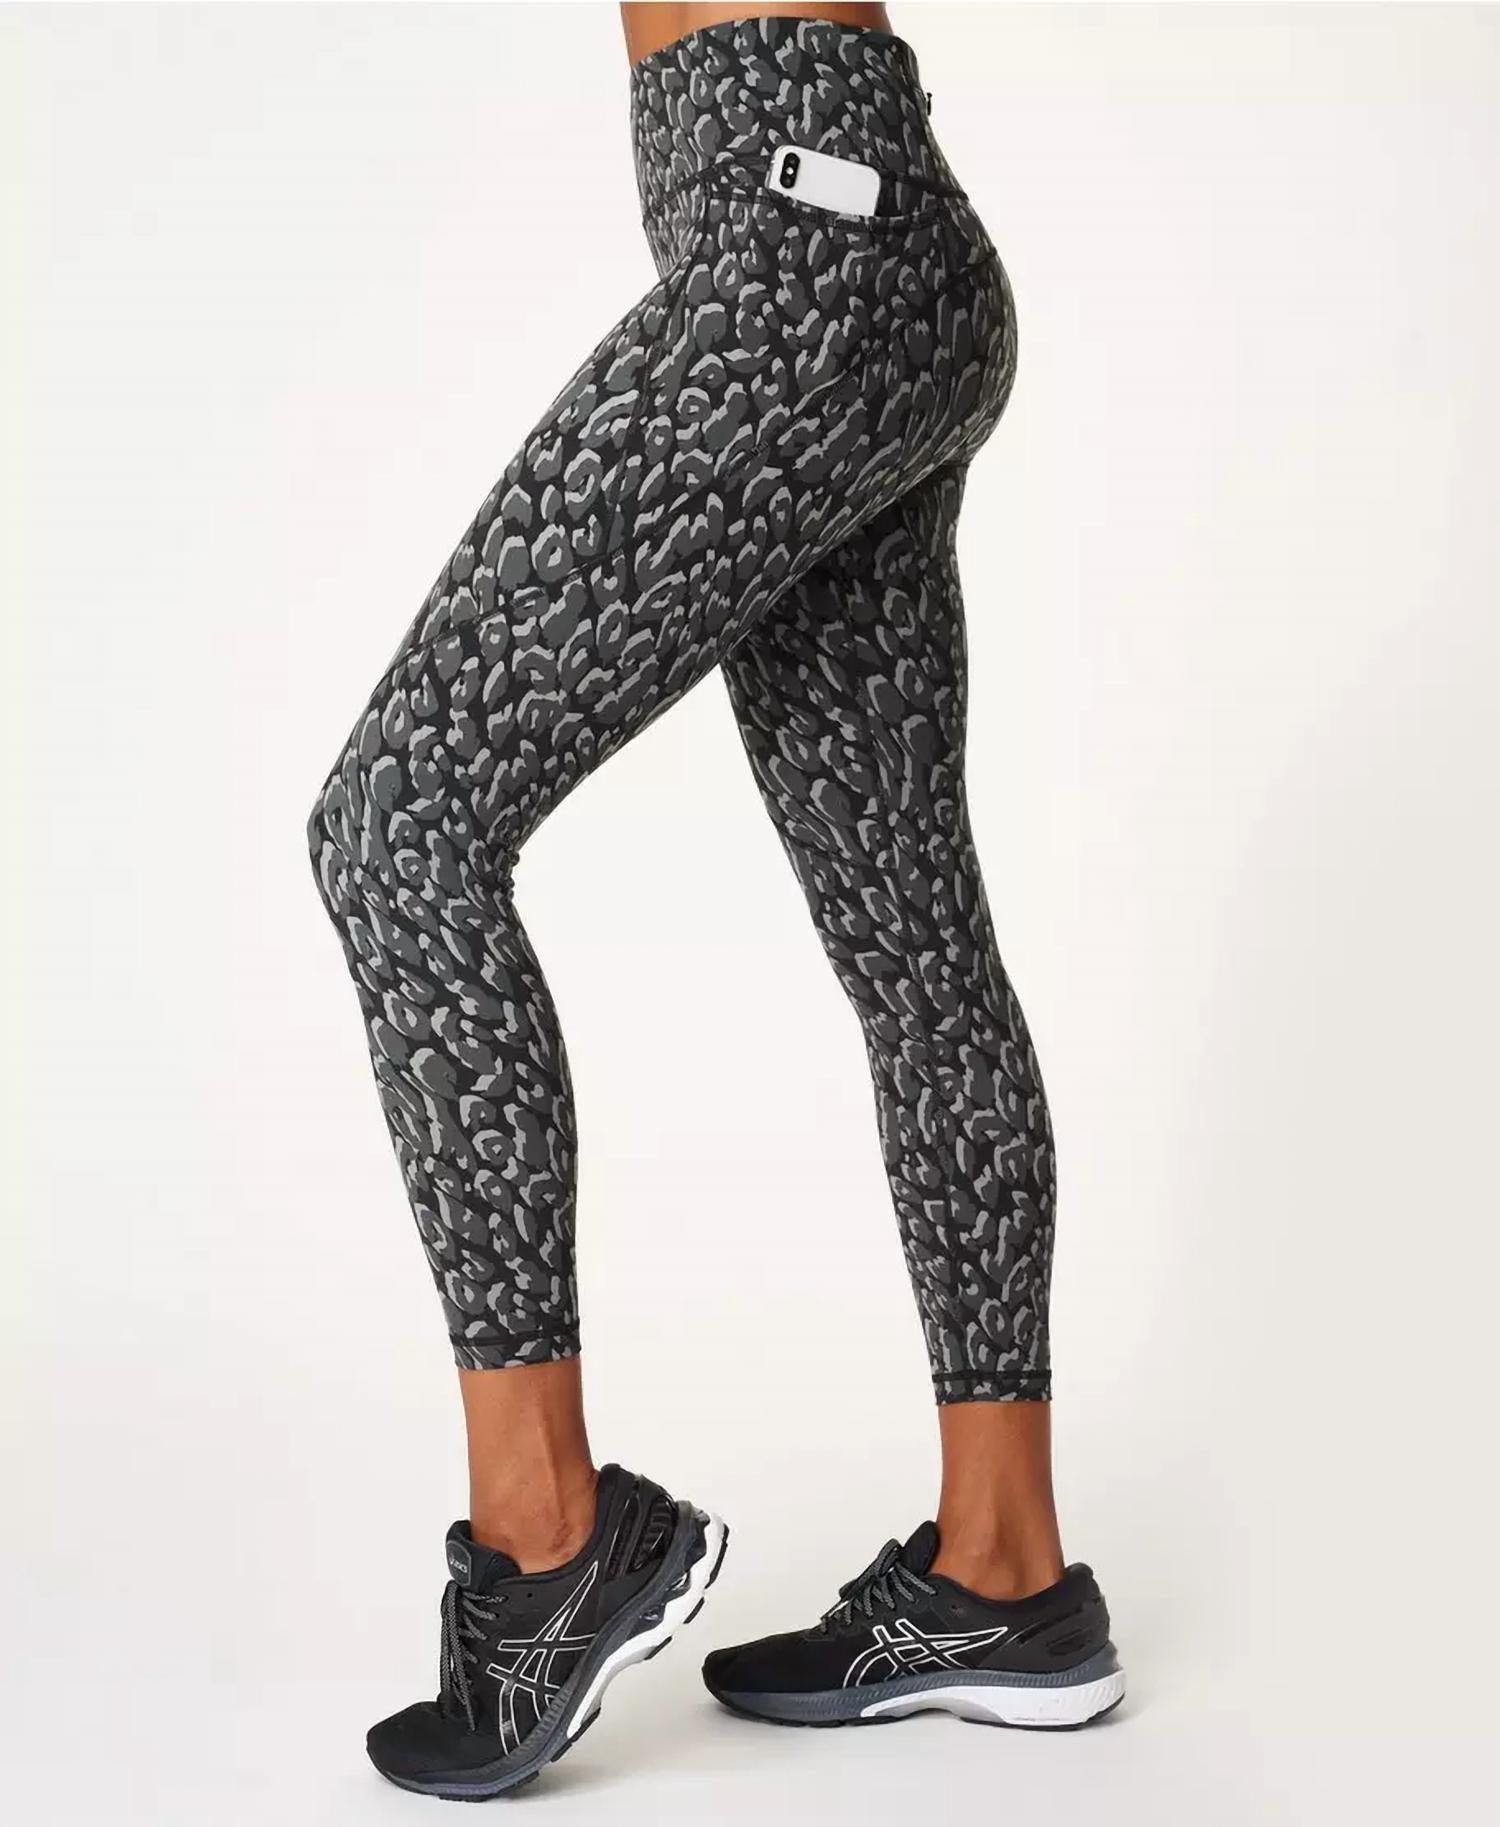 https://cdna.lystit.com/photos/shoppremiumoutlets/e14b4c5c/sweaty-betty-grey-Power-78-Workout-Leggings-In-Black-Tonal-Leopard-Print.jpeg